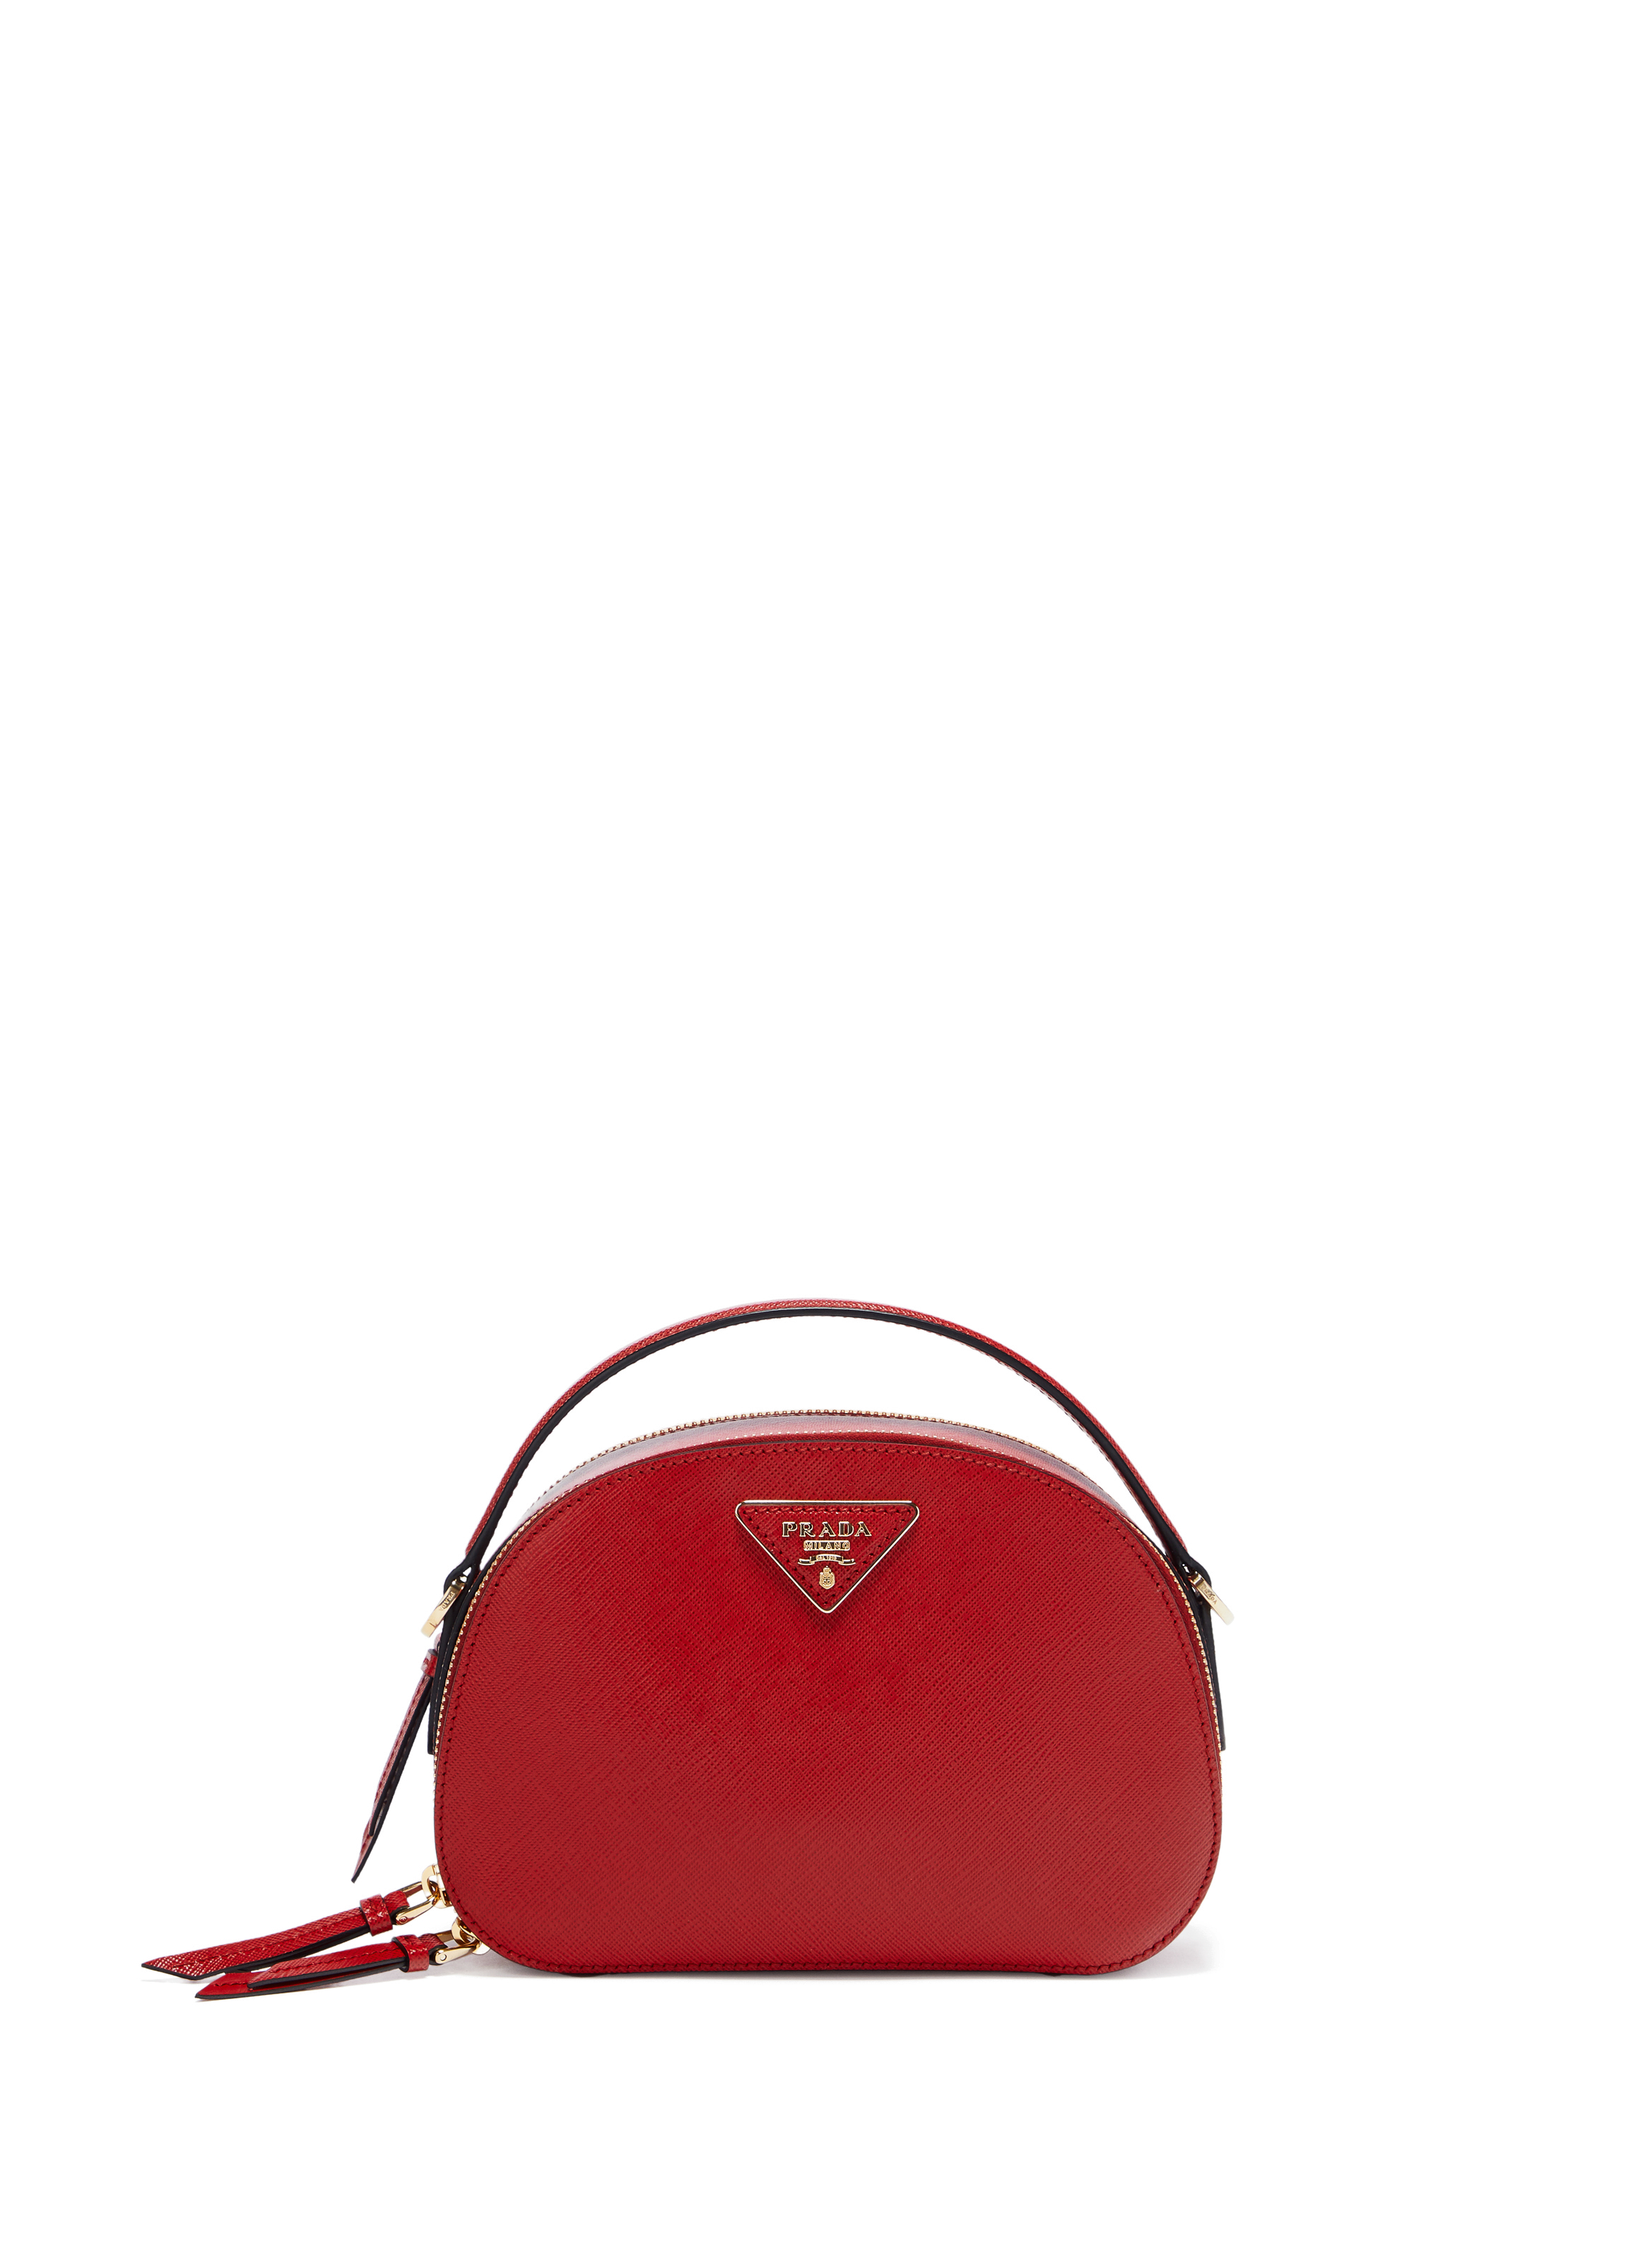 Prada Handbags Go Red For Spring/Summer 2022 - The Vault